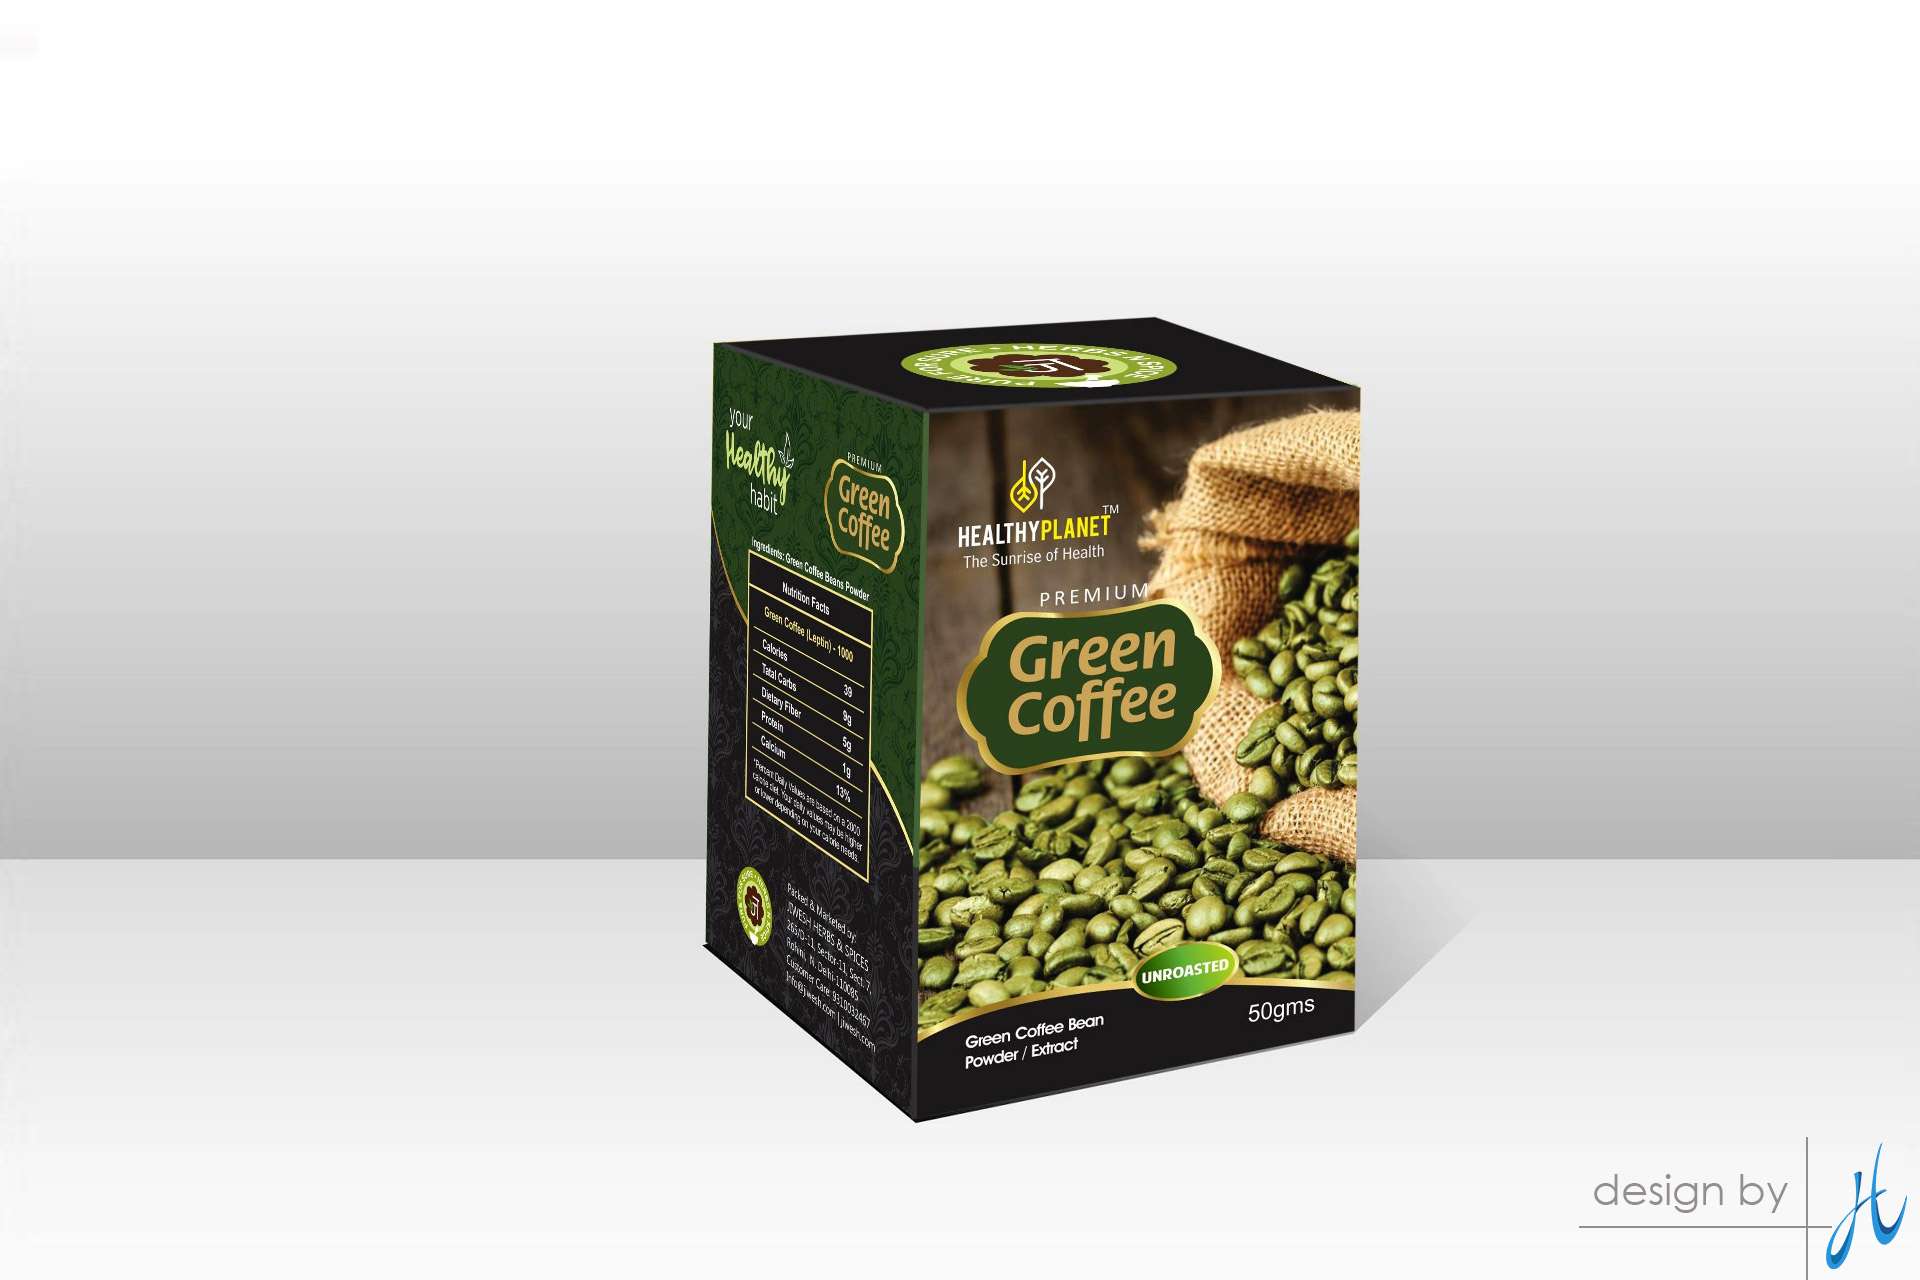 Healthy Planet Green Coffee Box